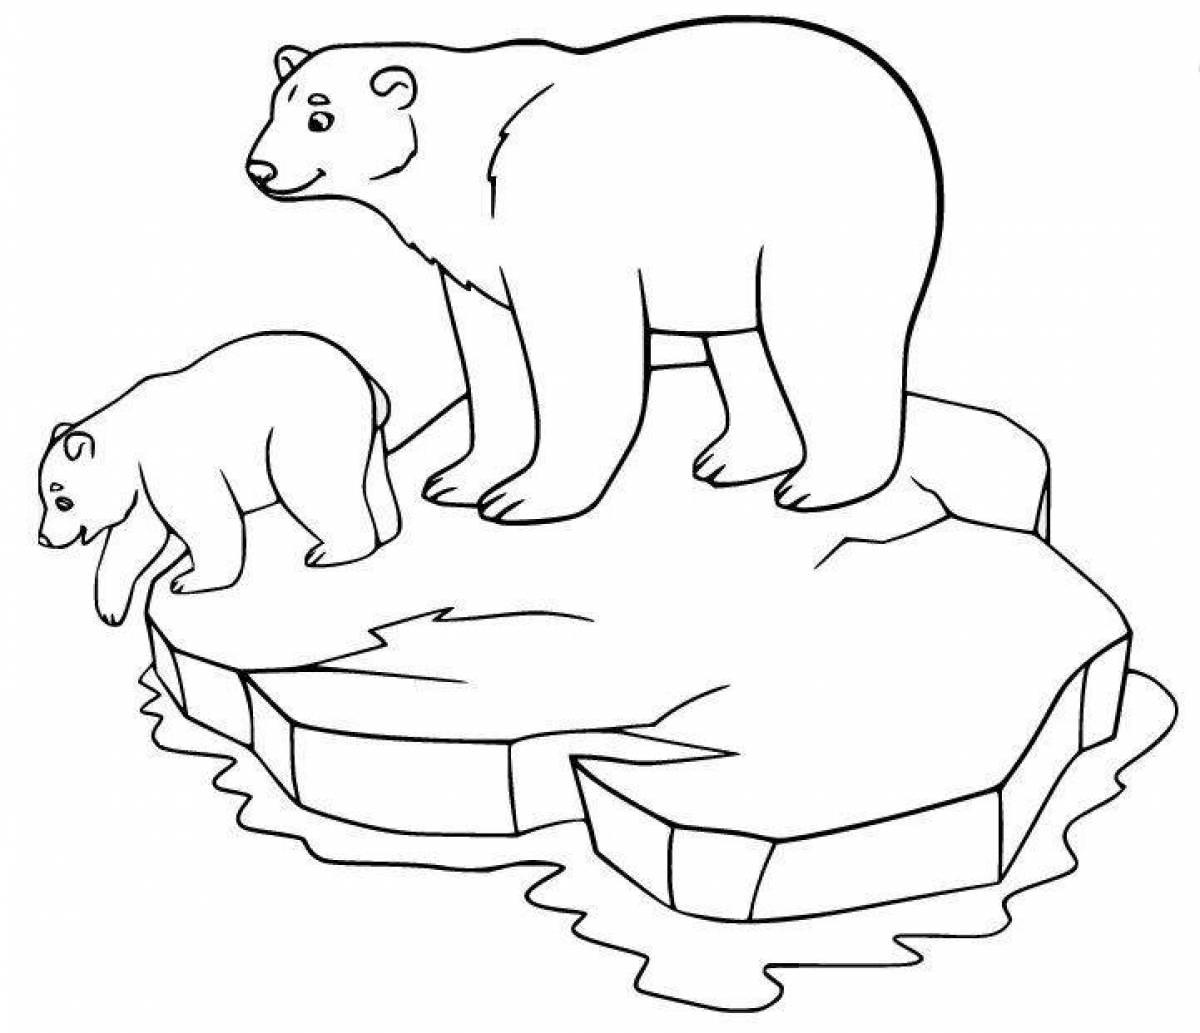 Coloring book funny polar bear on ice